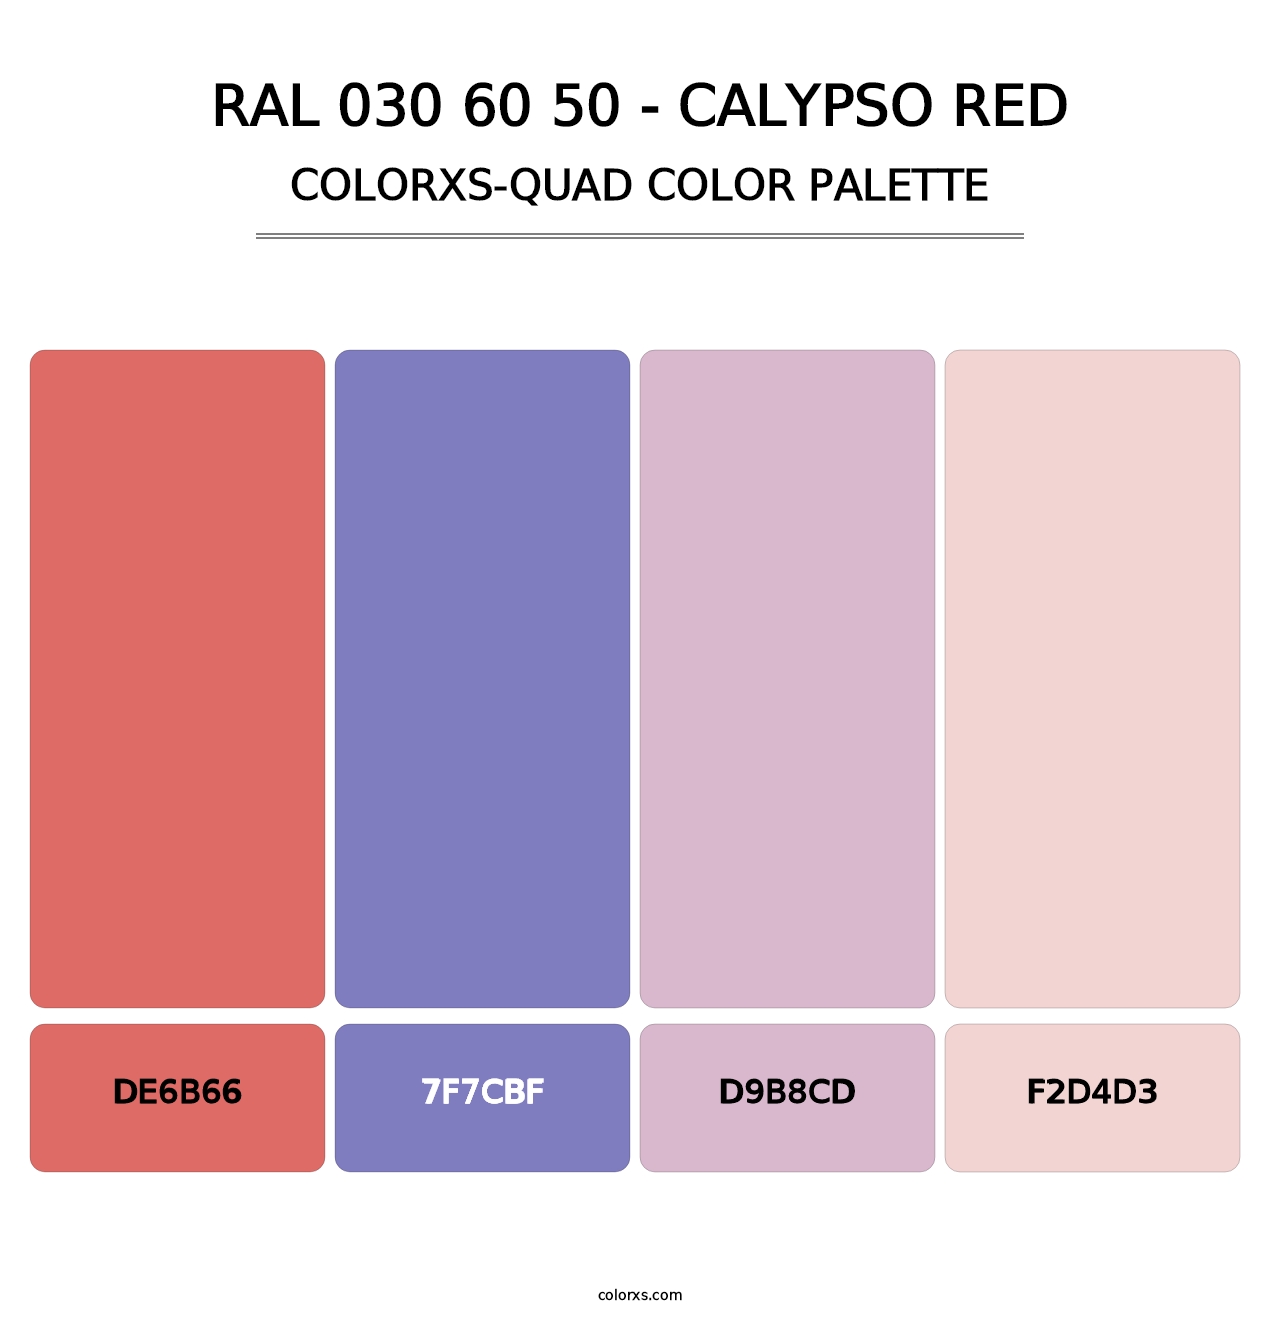 RAL 030 60 50 - Calypso Red - Colorxs Quad Palette